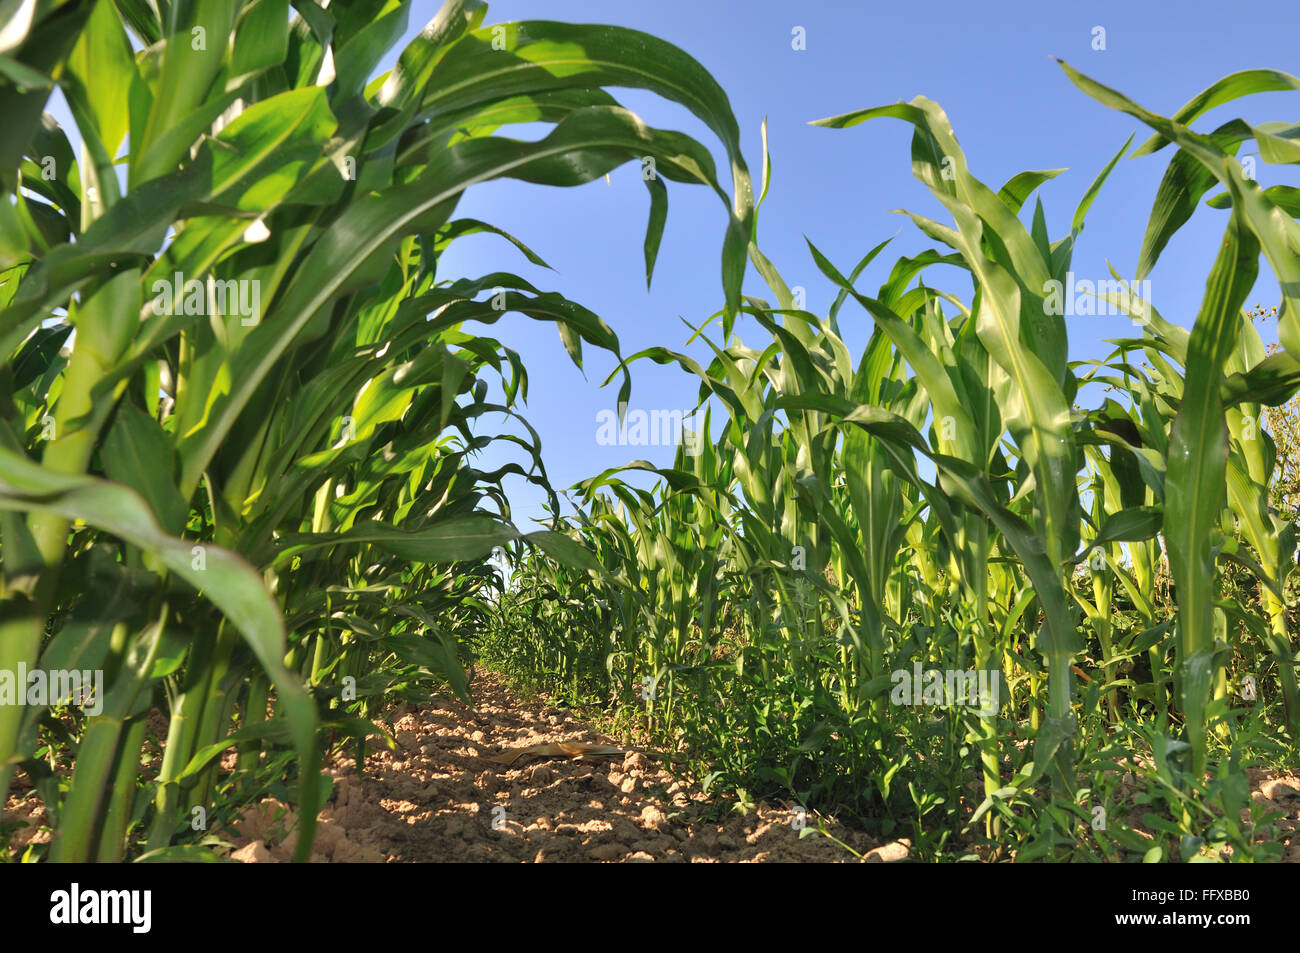 field of maize with greenery foliage Stock Photo